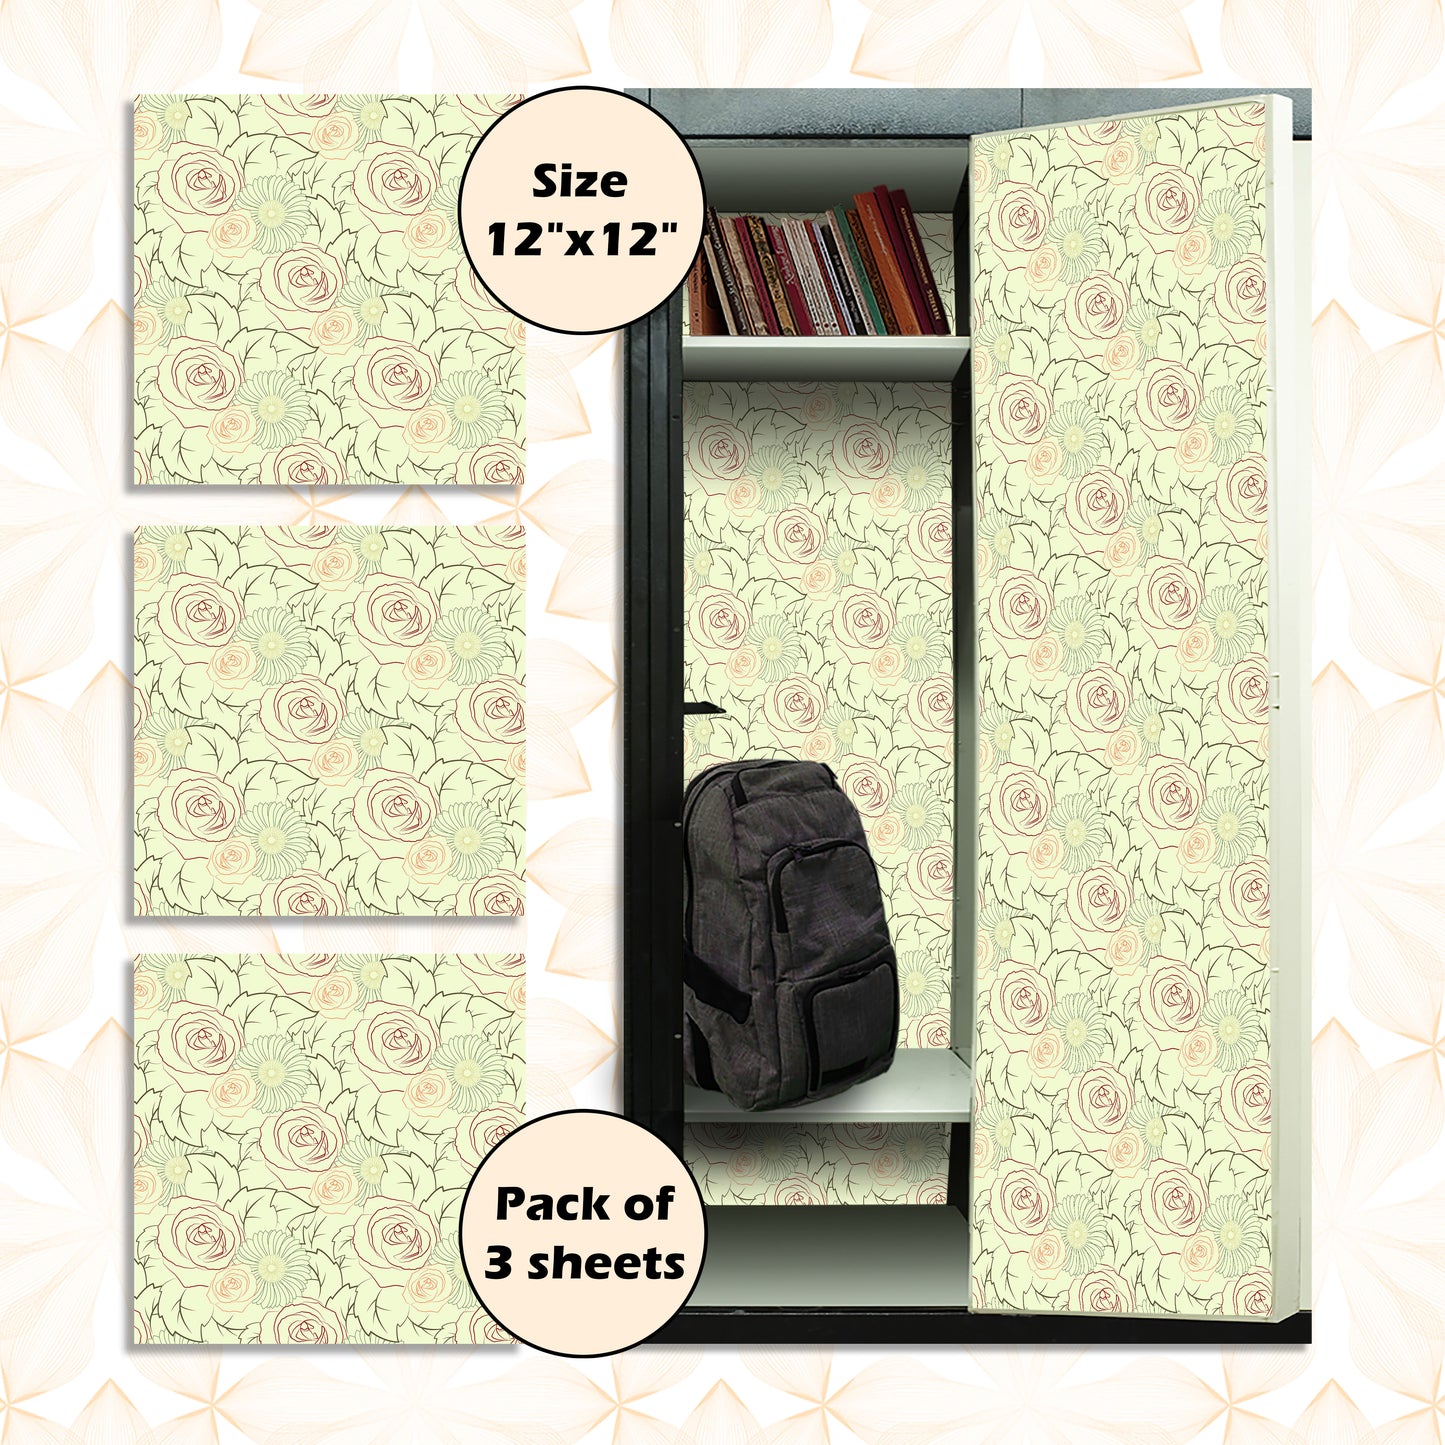 PELICAN INDUSTRIAL Deluxe School Locker Magnetic Wallpaper (Full Sheet Magnetic) - Full Cover Standard Half Lockers Pack of 12 Sheets - (Flowers vr69)